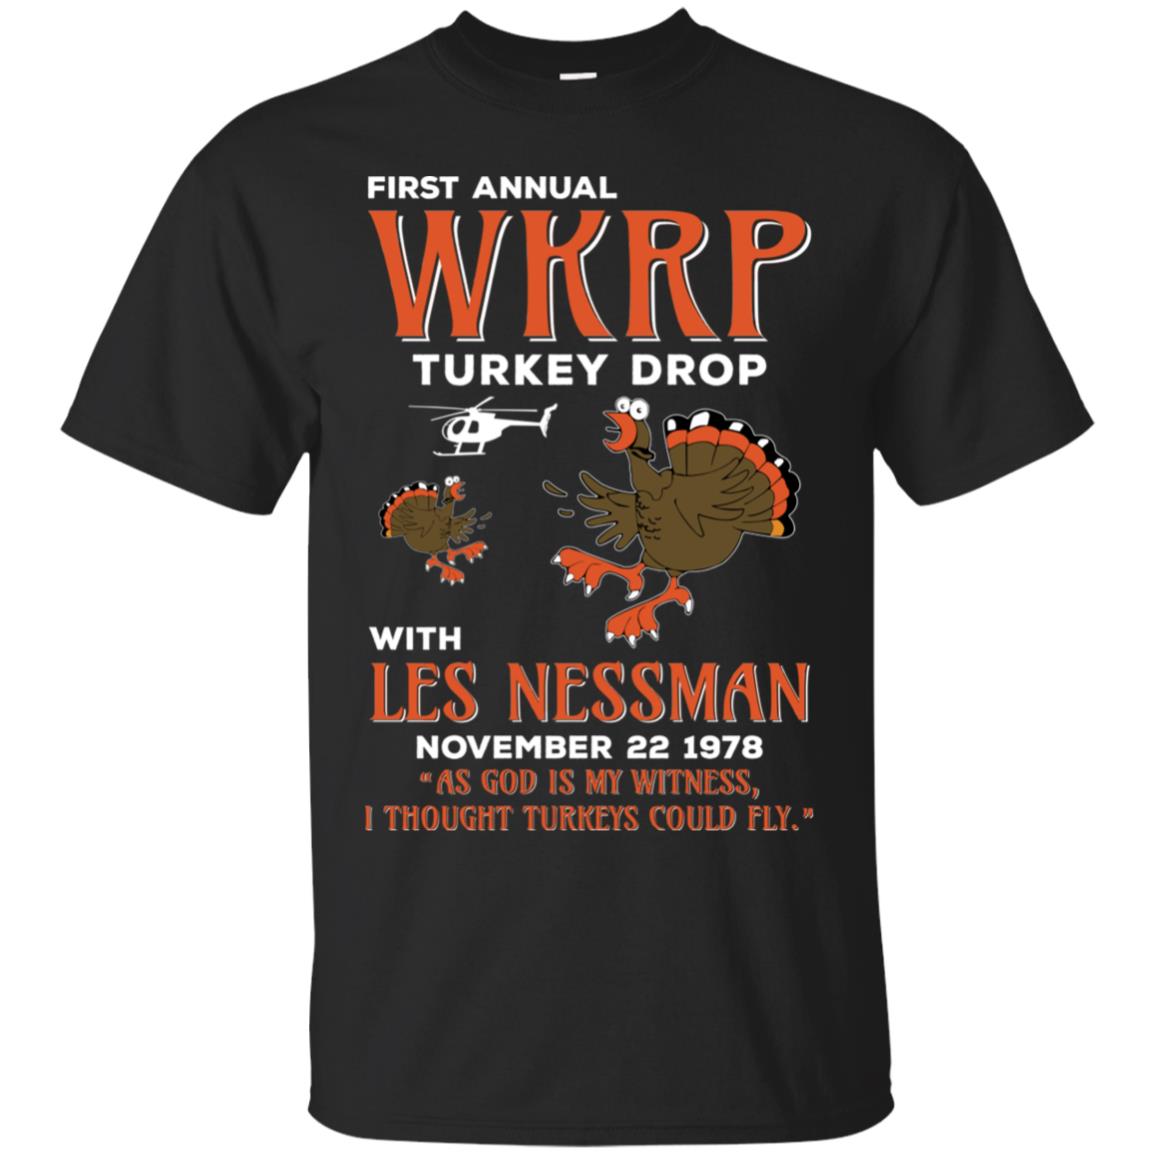 First Annual WKRP Turkey Drop With Les Nessman November 22 1978 T shirt, Ls...